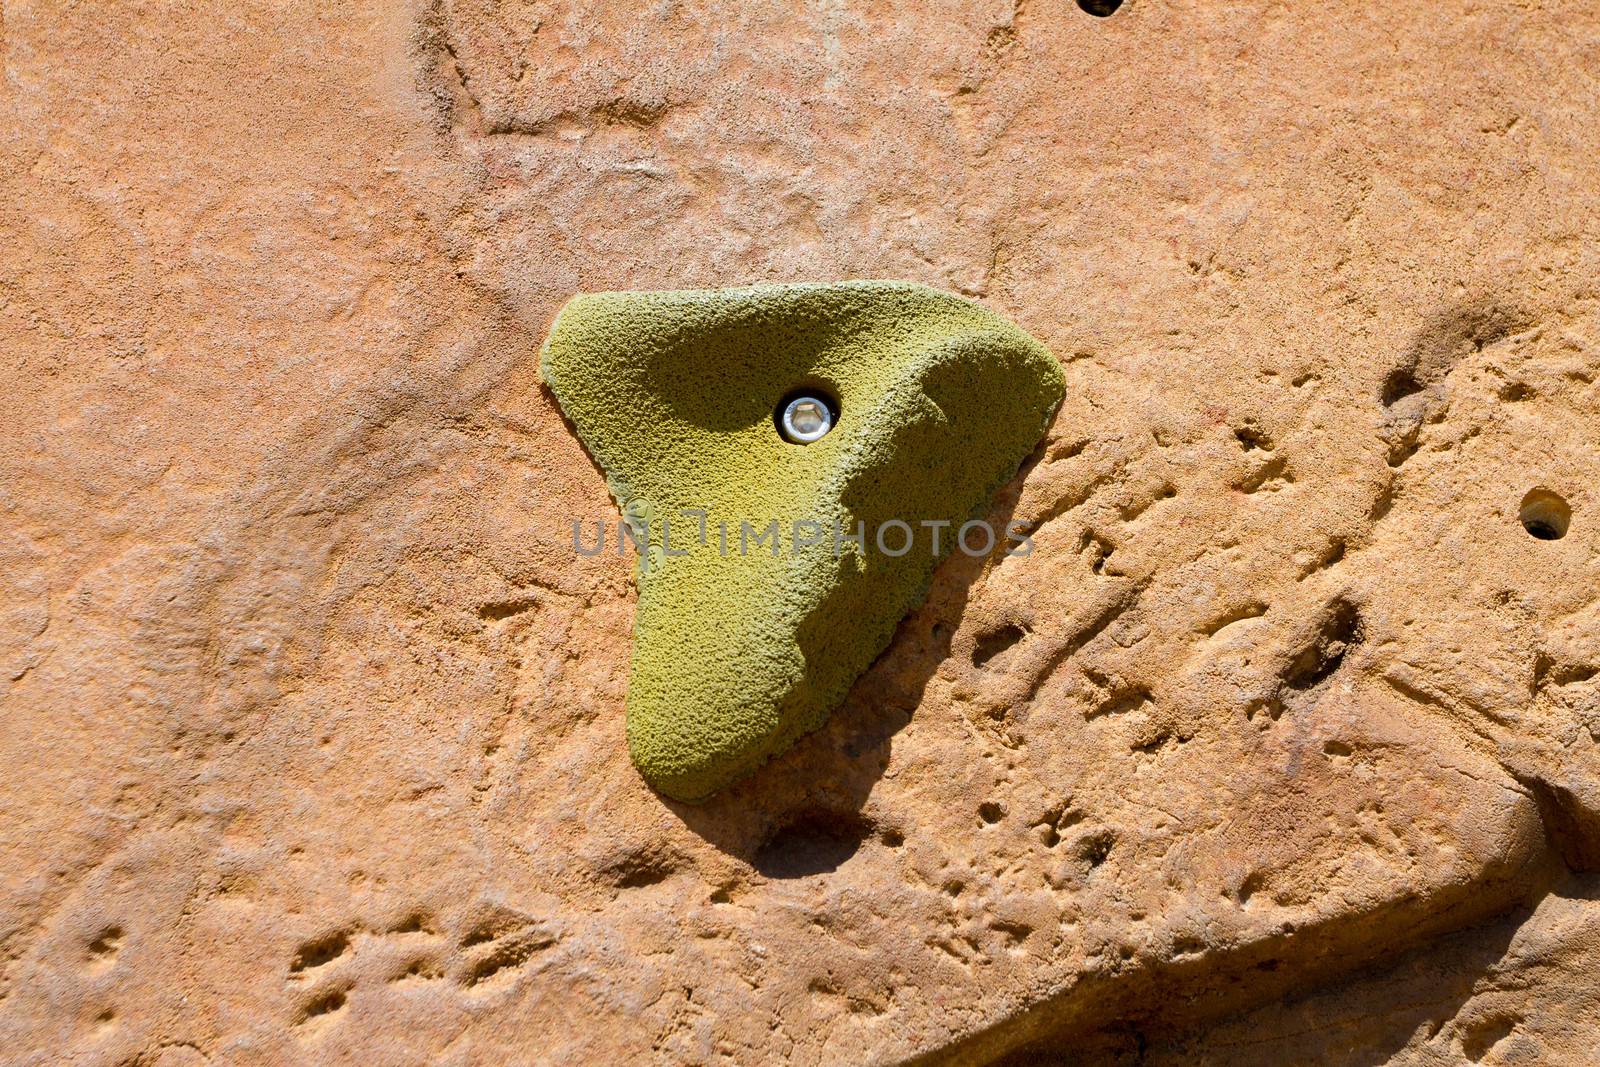 Rock Climbing Handhold Detail by joshuaraineyphotography